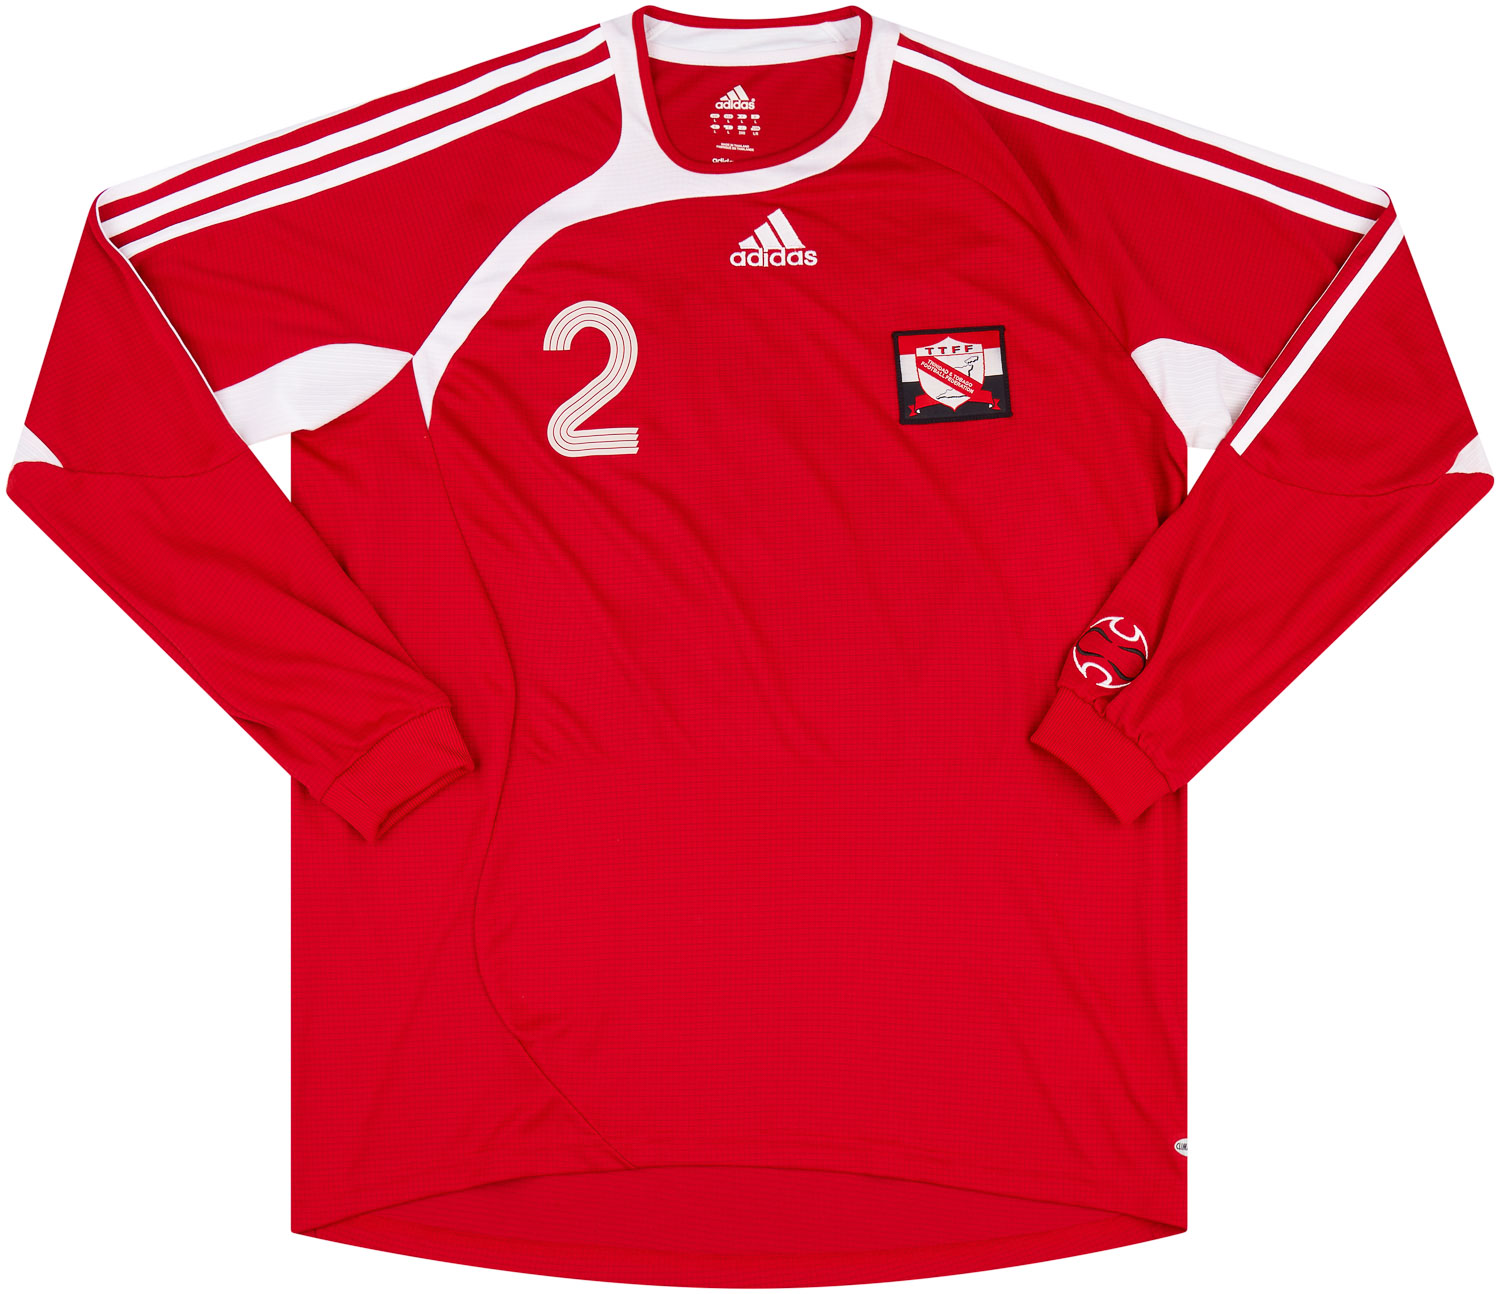 2006 Trinidad & Tobago Match Issue Home Shirt #2 (Cox)